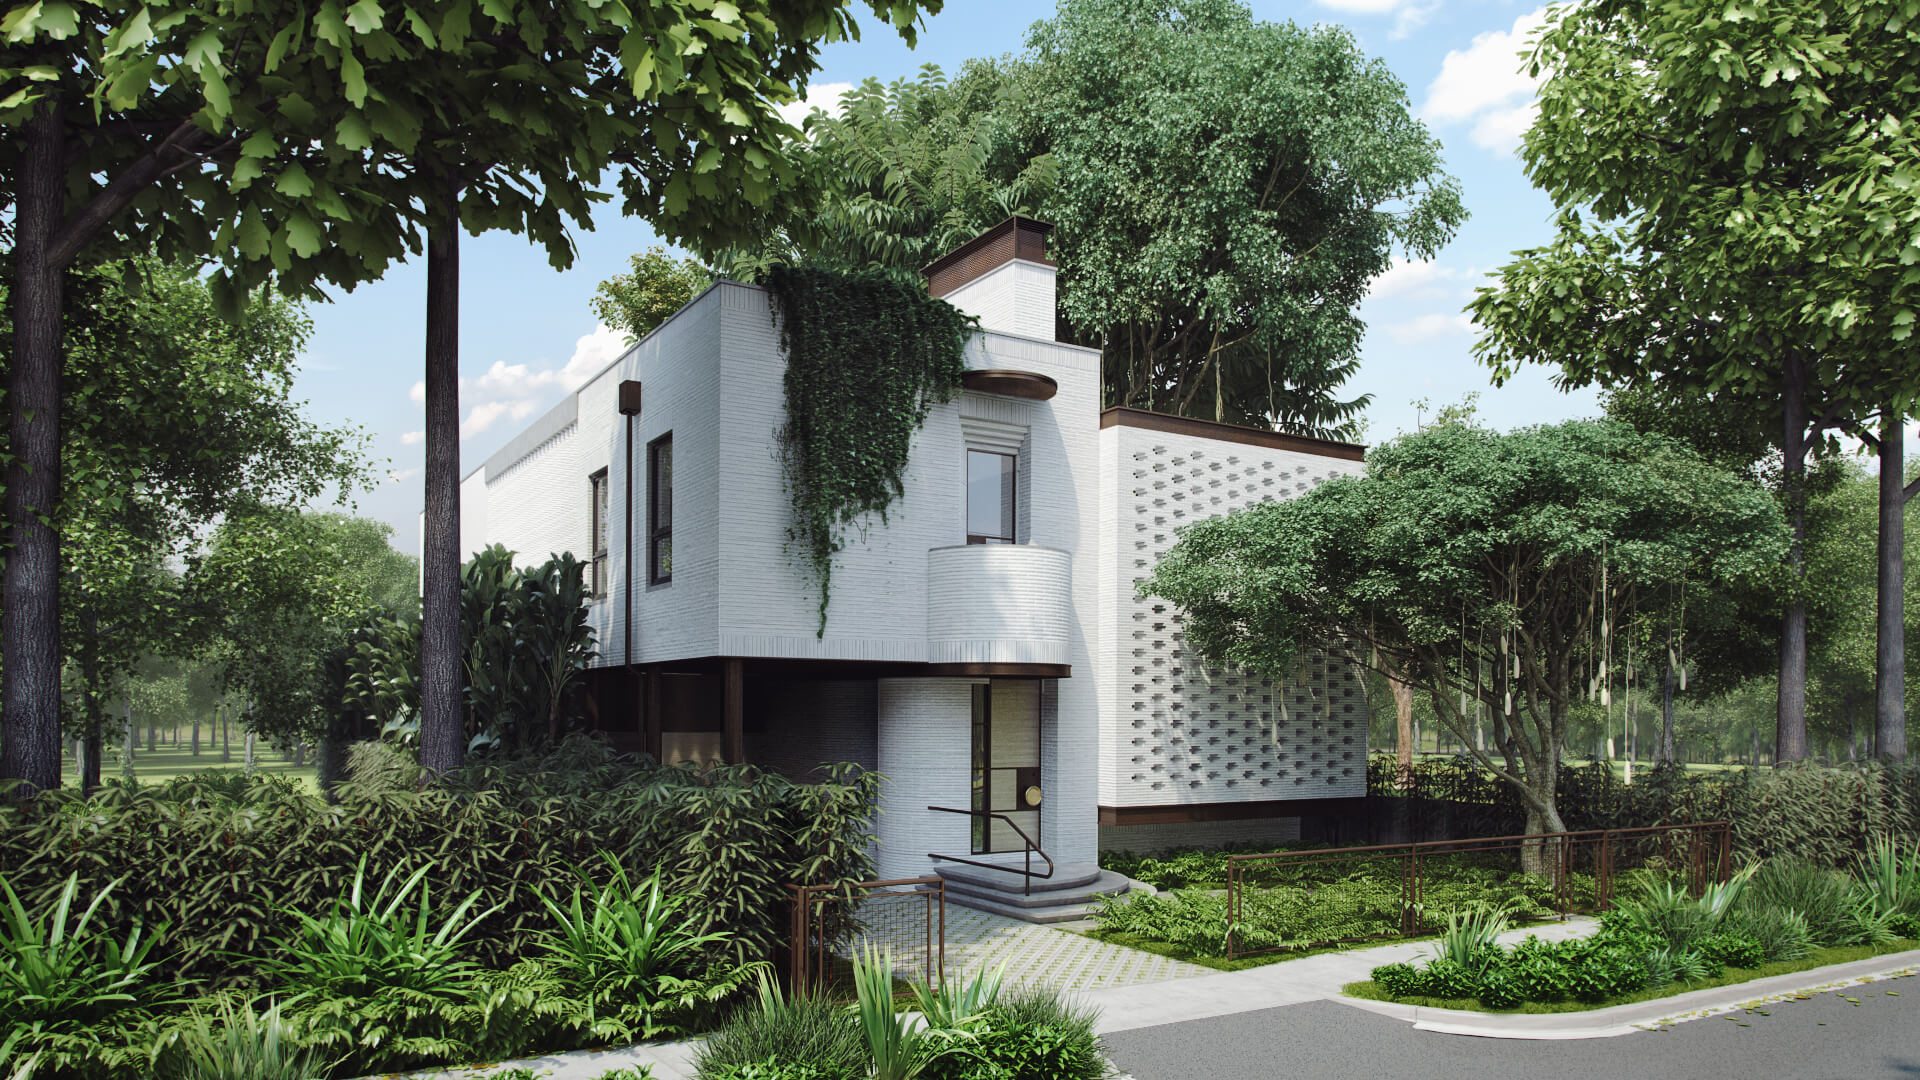 3D Visualization of a Stylish House